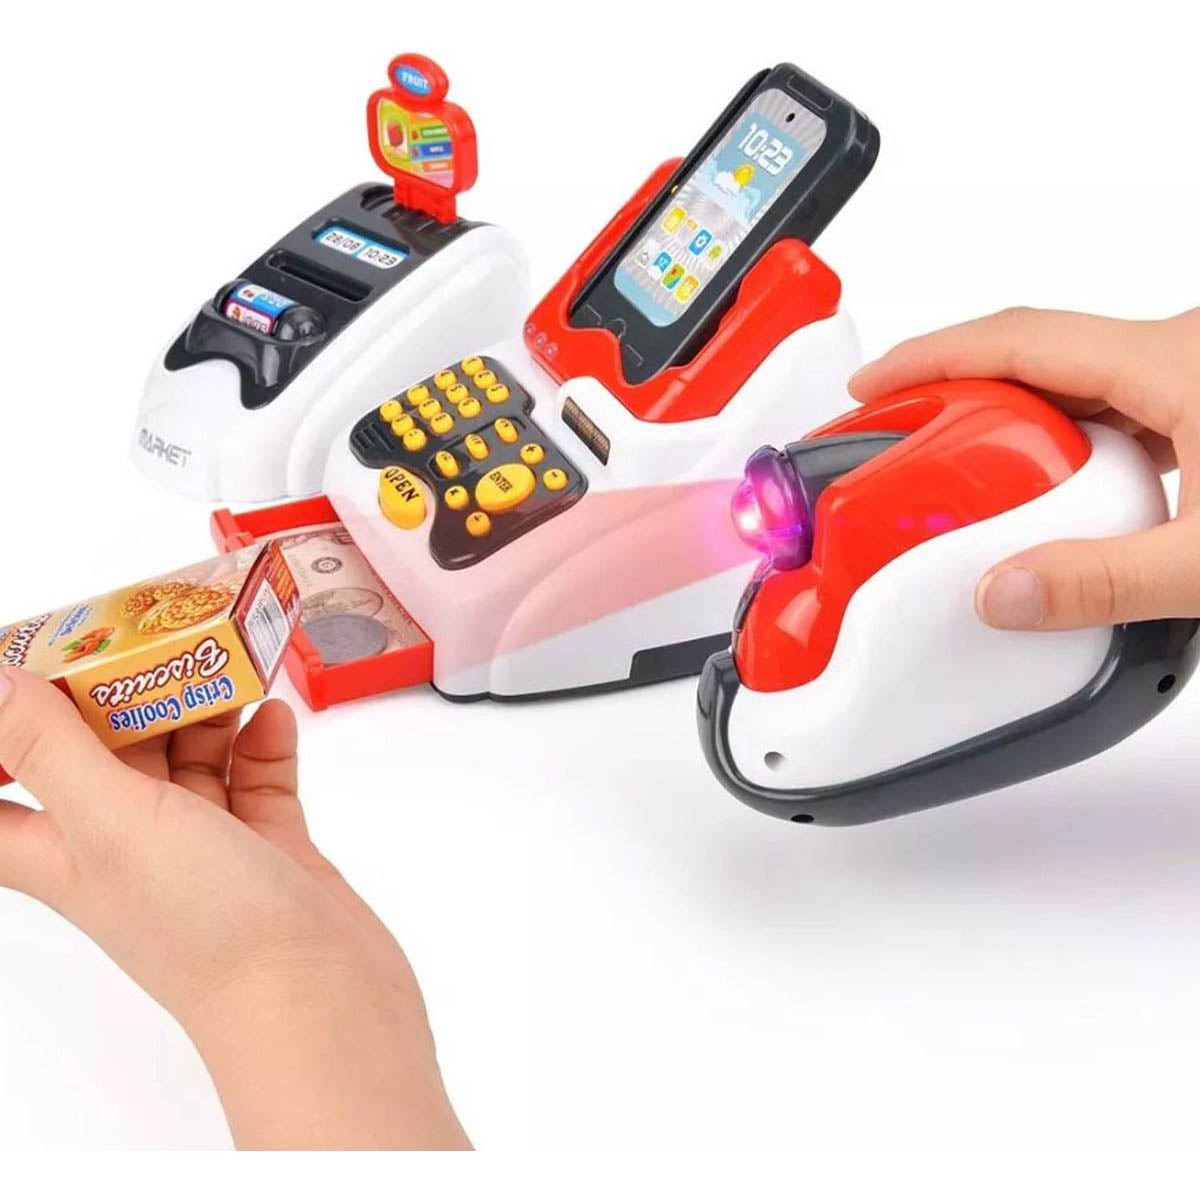 <tc>Ariko</tc> Supermarket Playset - Toys Children - Shop Toys Children - Toy Cash Register - Batteries included